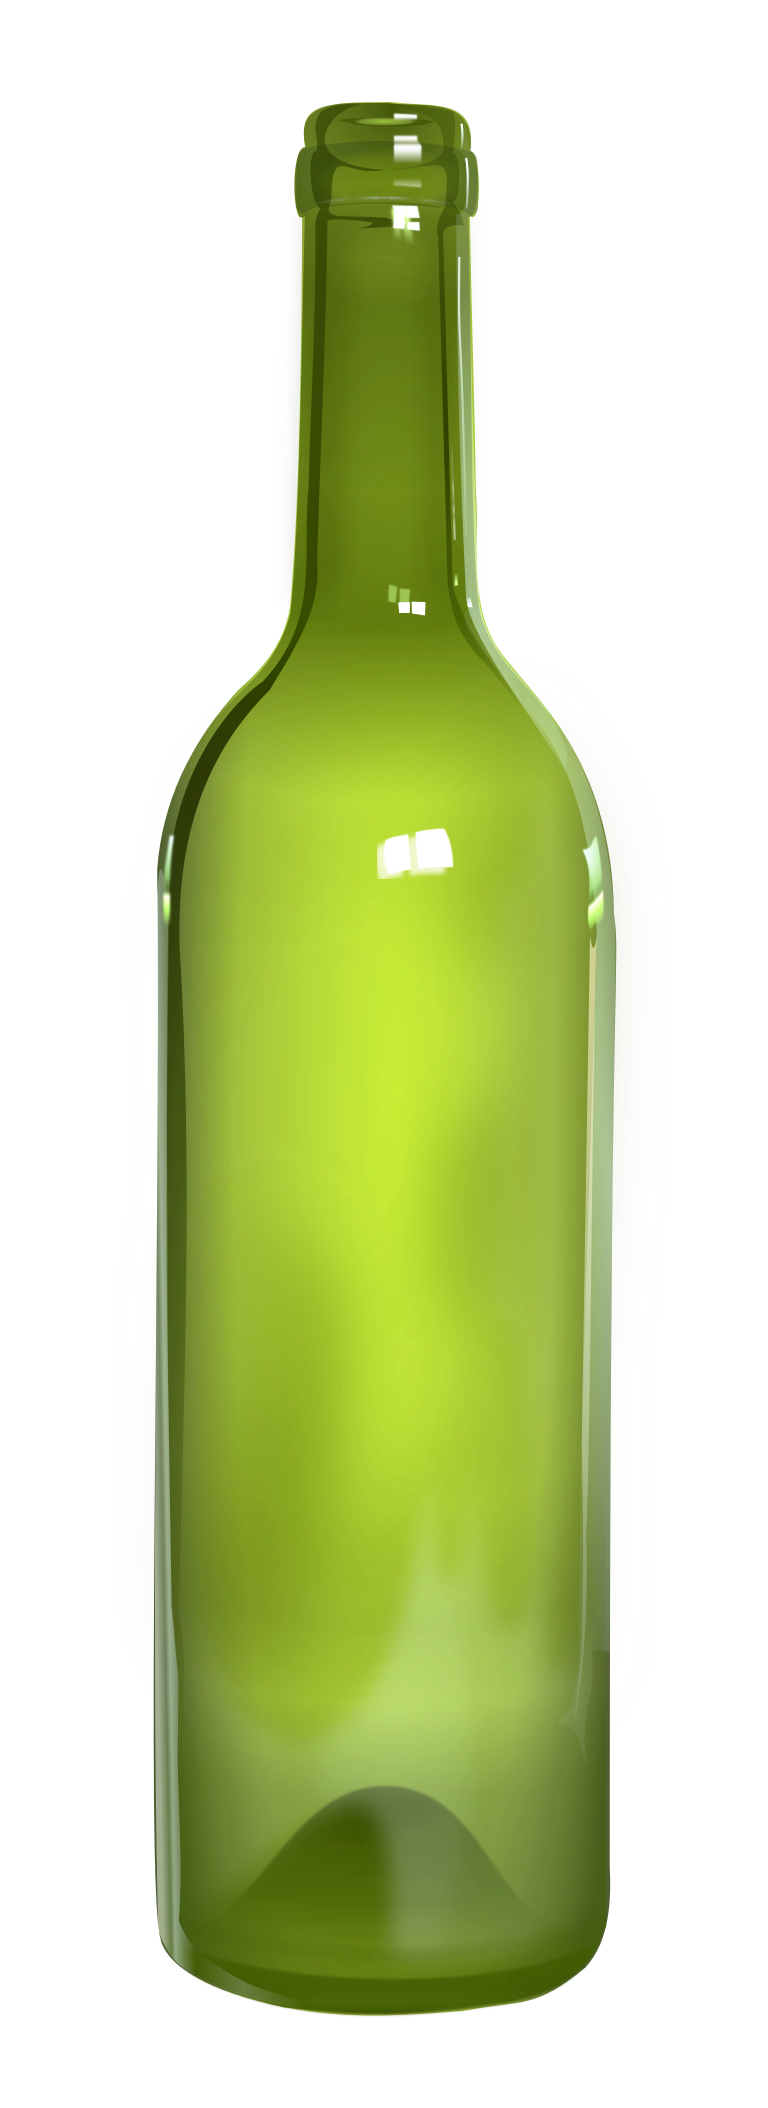 Green Large Glass Bottle Png Transparent Background Free Download